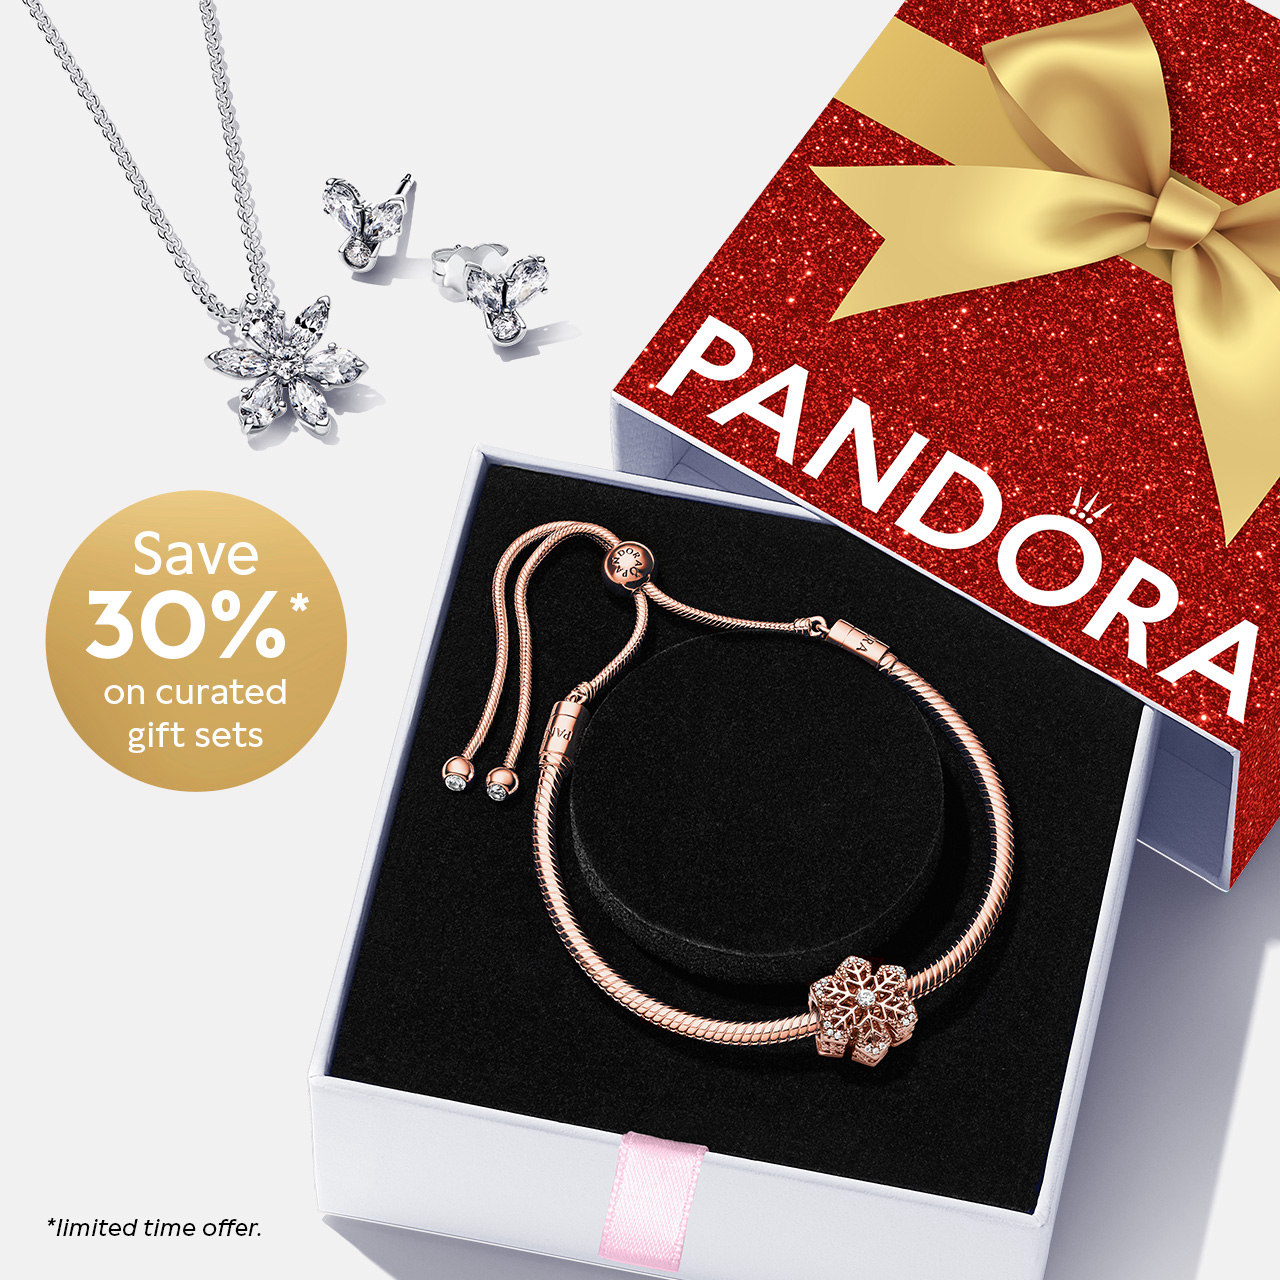 Pandora Campaign 61 Make Special Moments Shine Bright EN 1280x1280 1